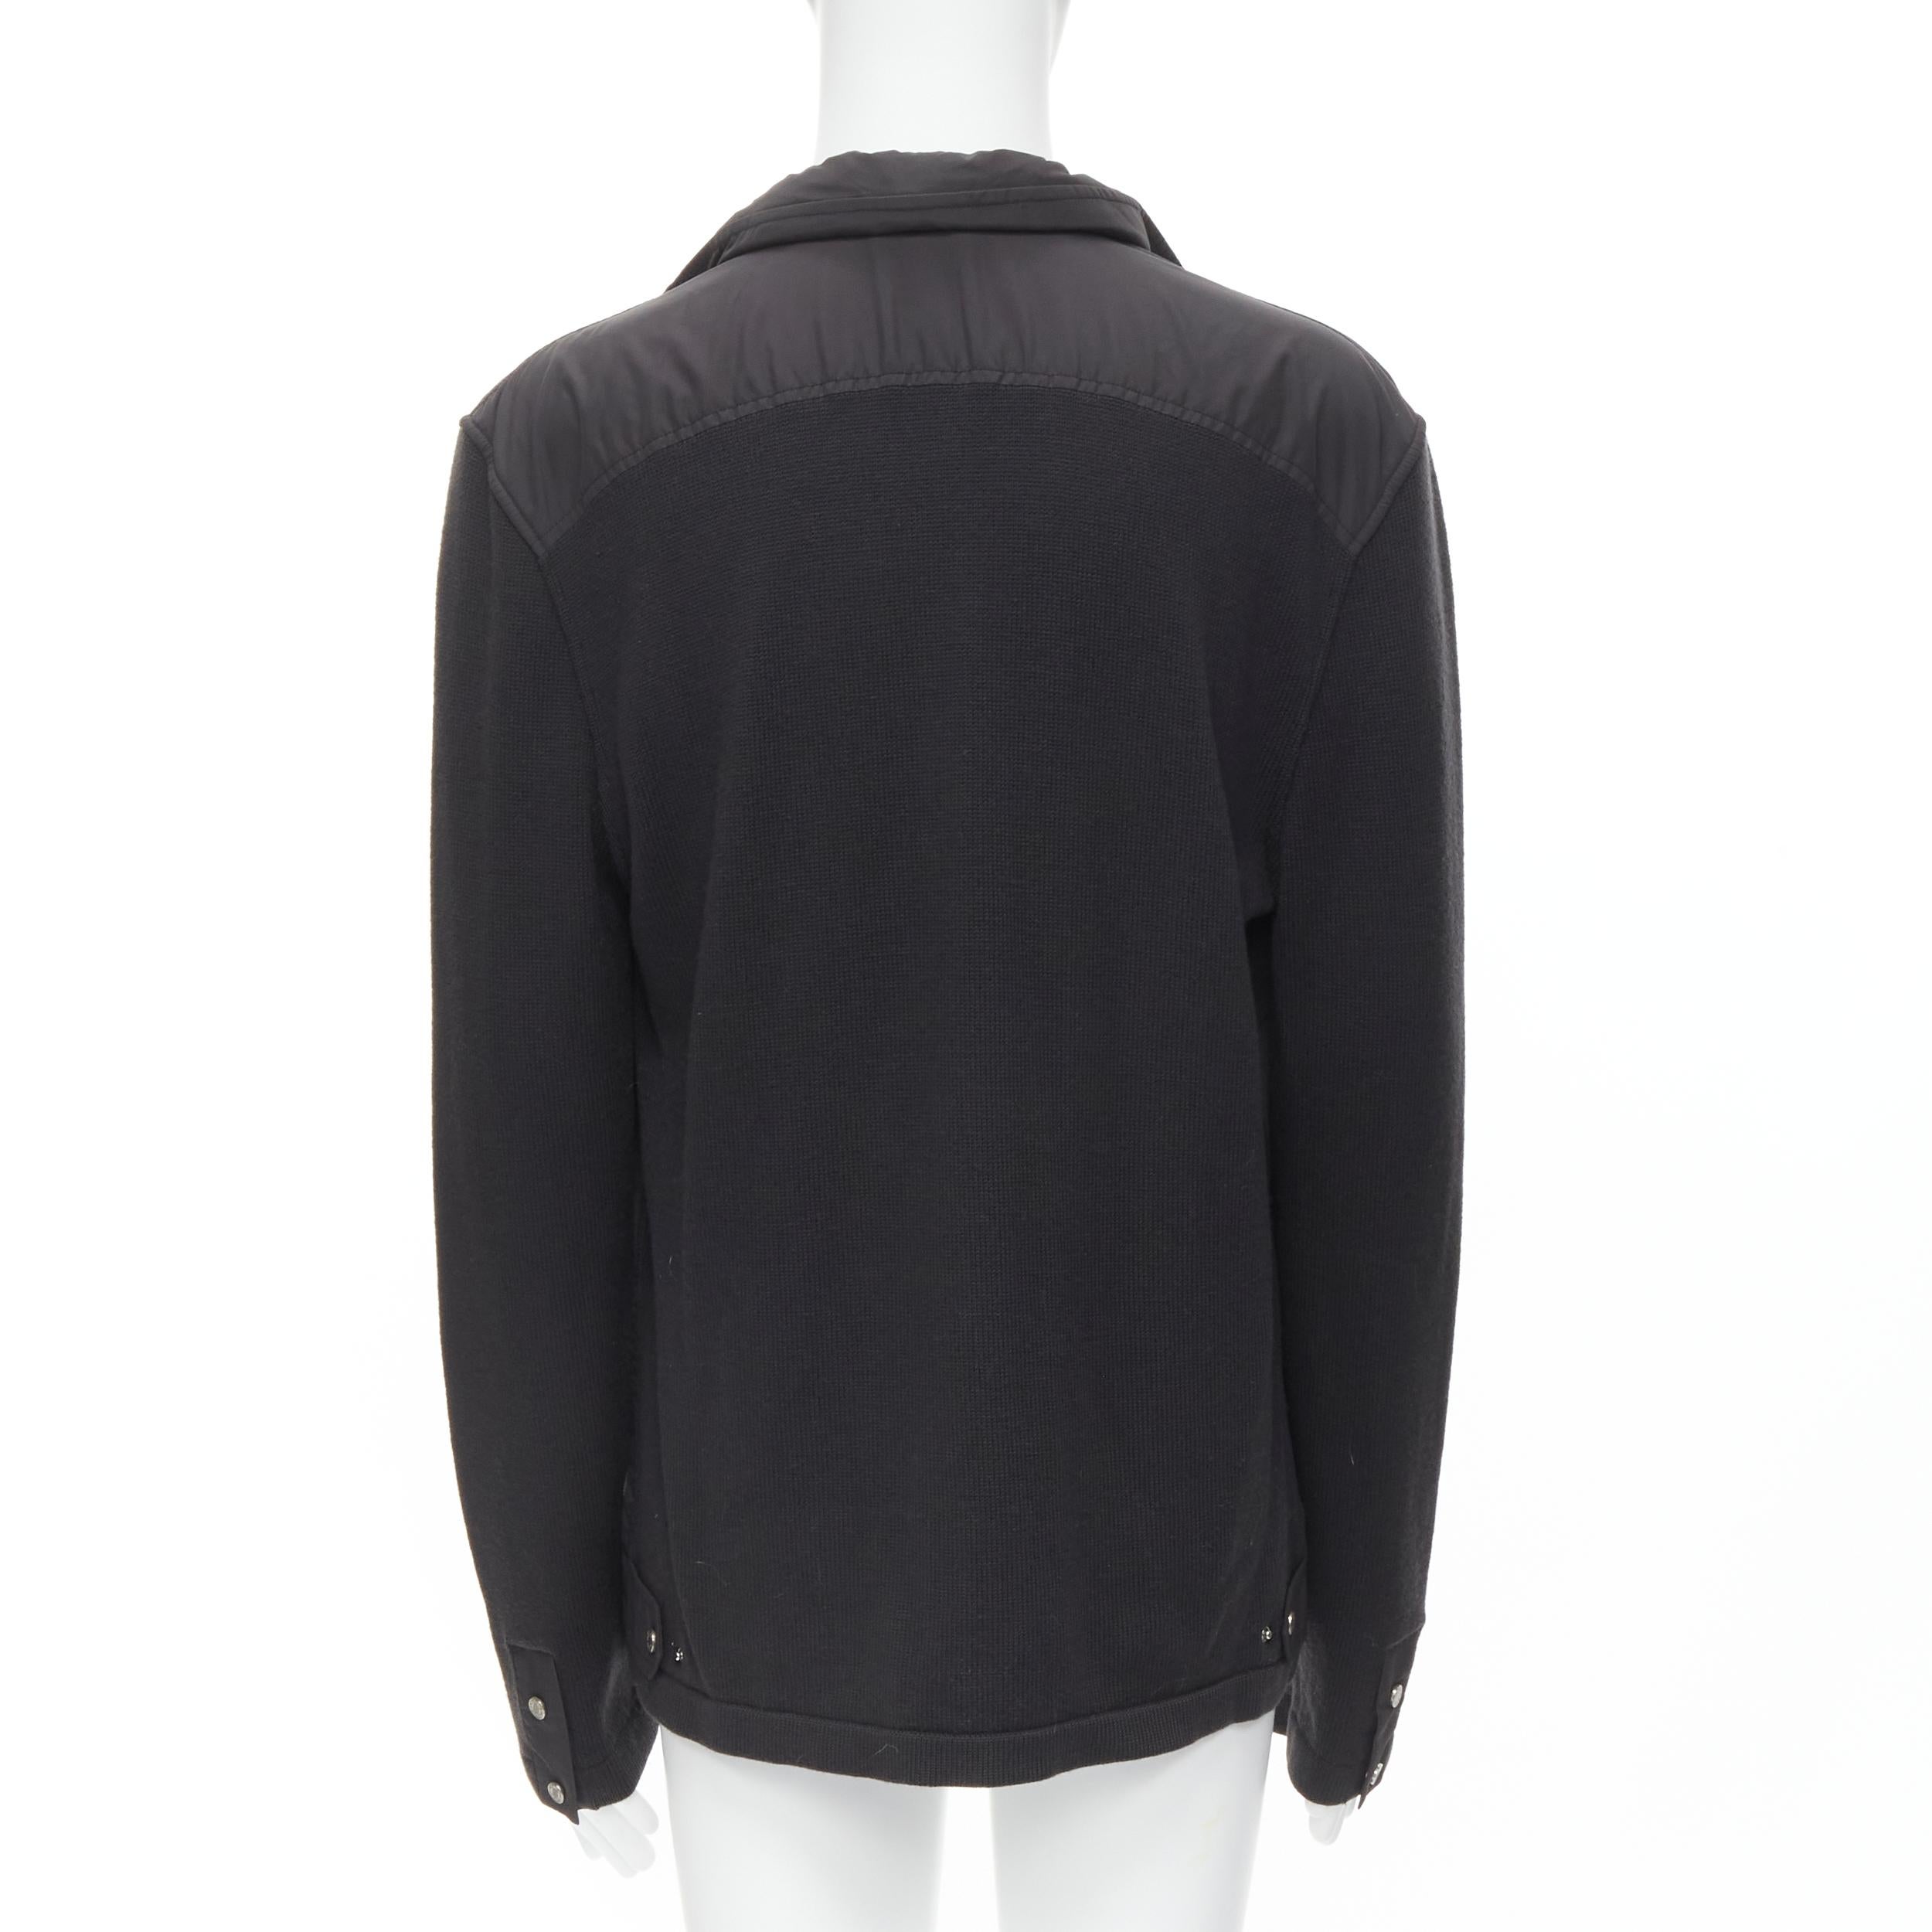 Black HERMES black nylon merino wool knit leather zip jacket XXL